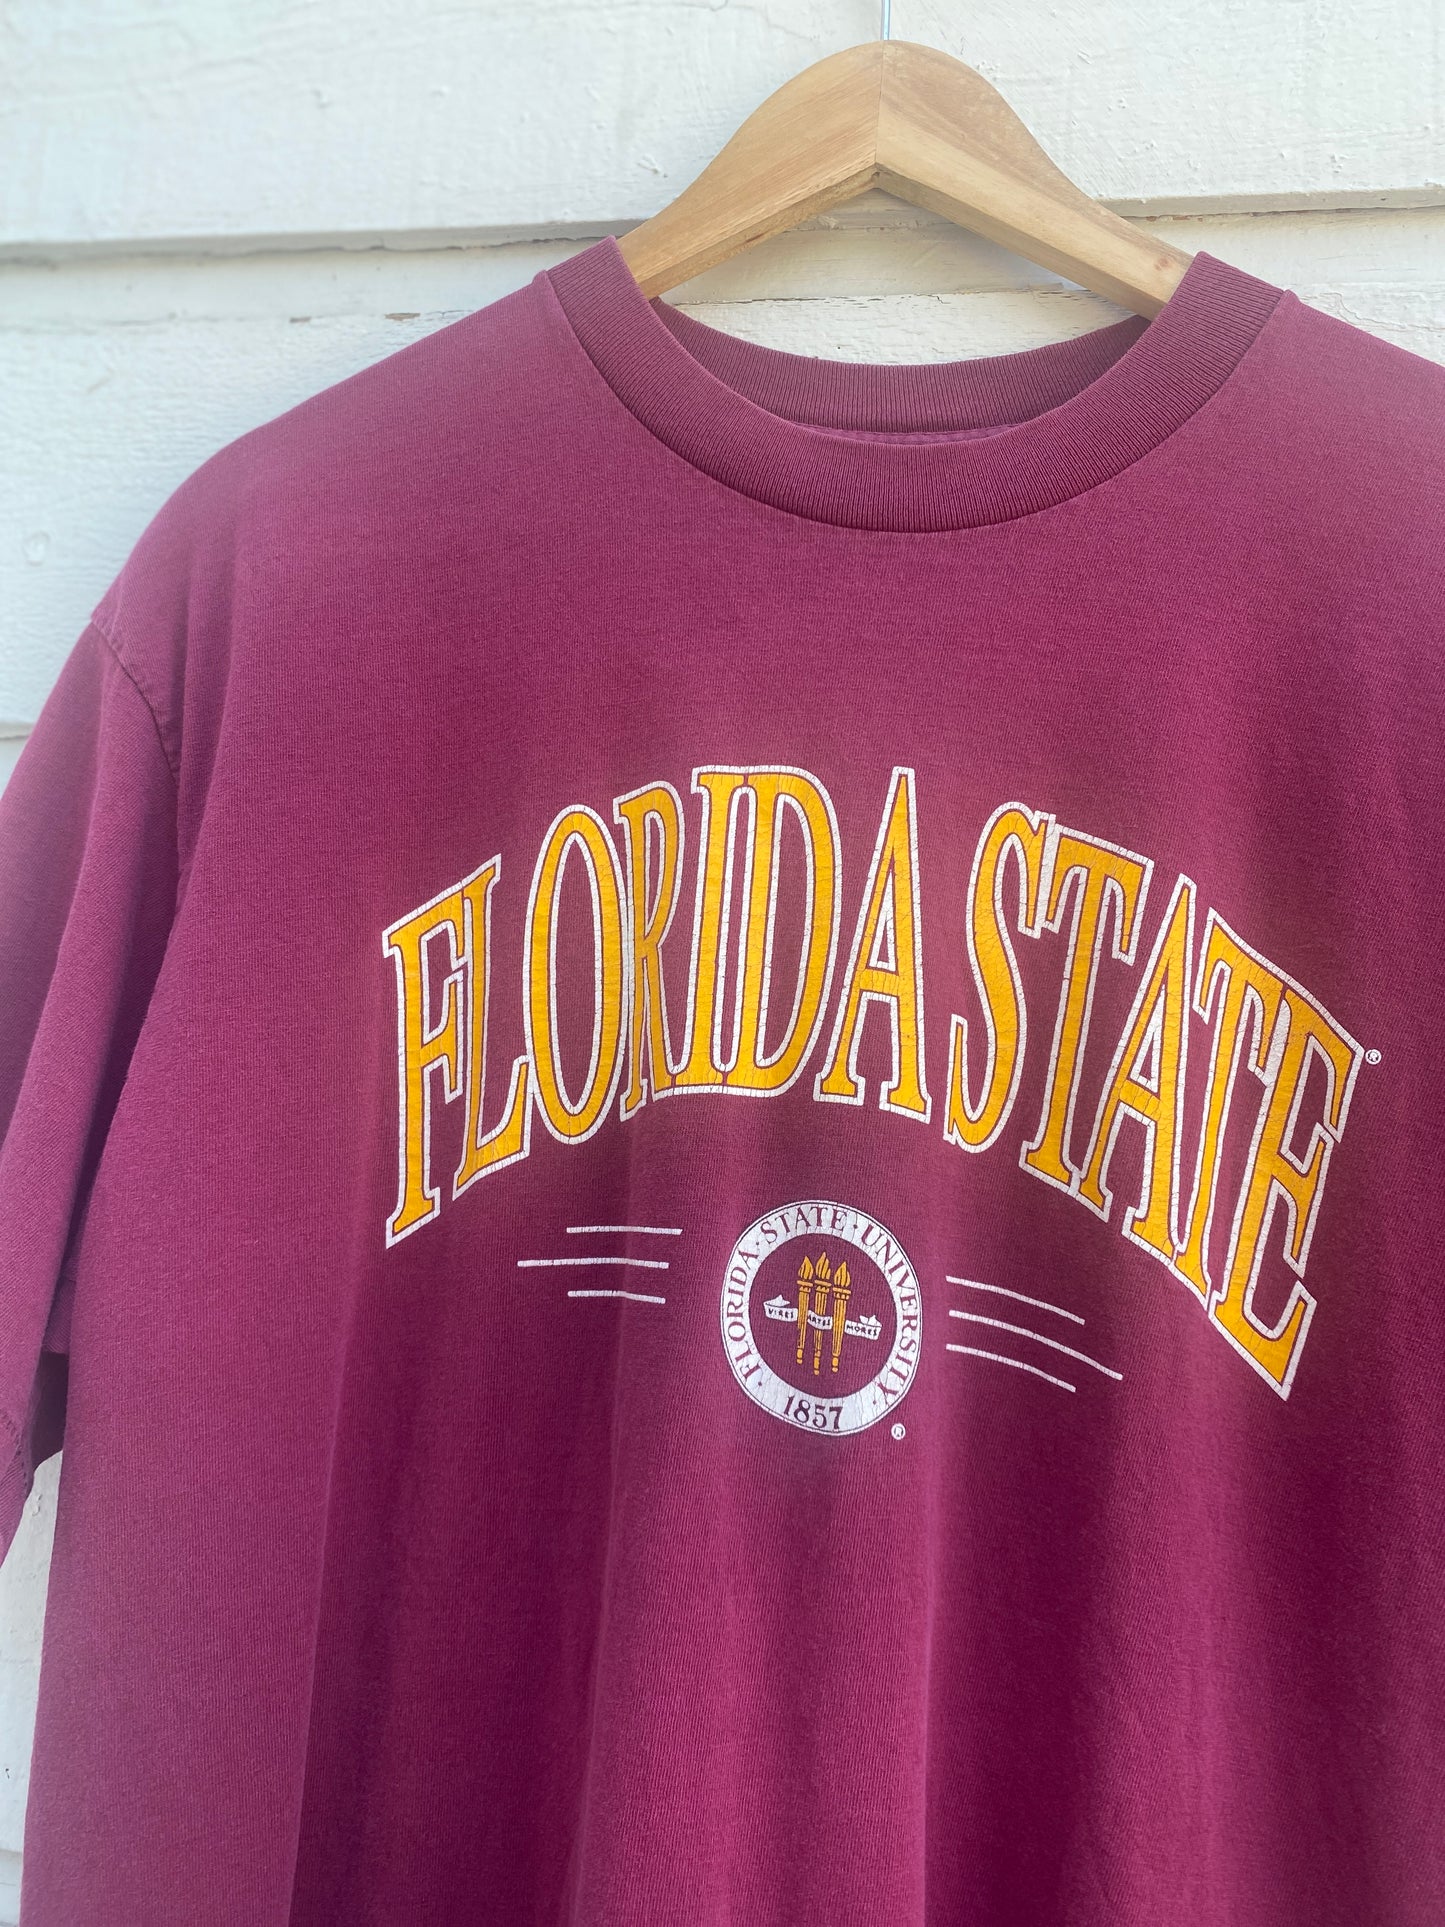 Vintage Florida State University Tshirt XL